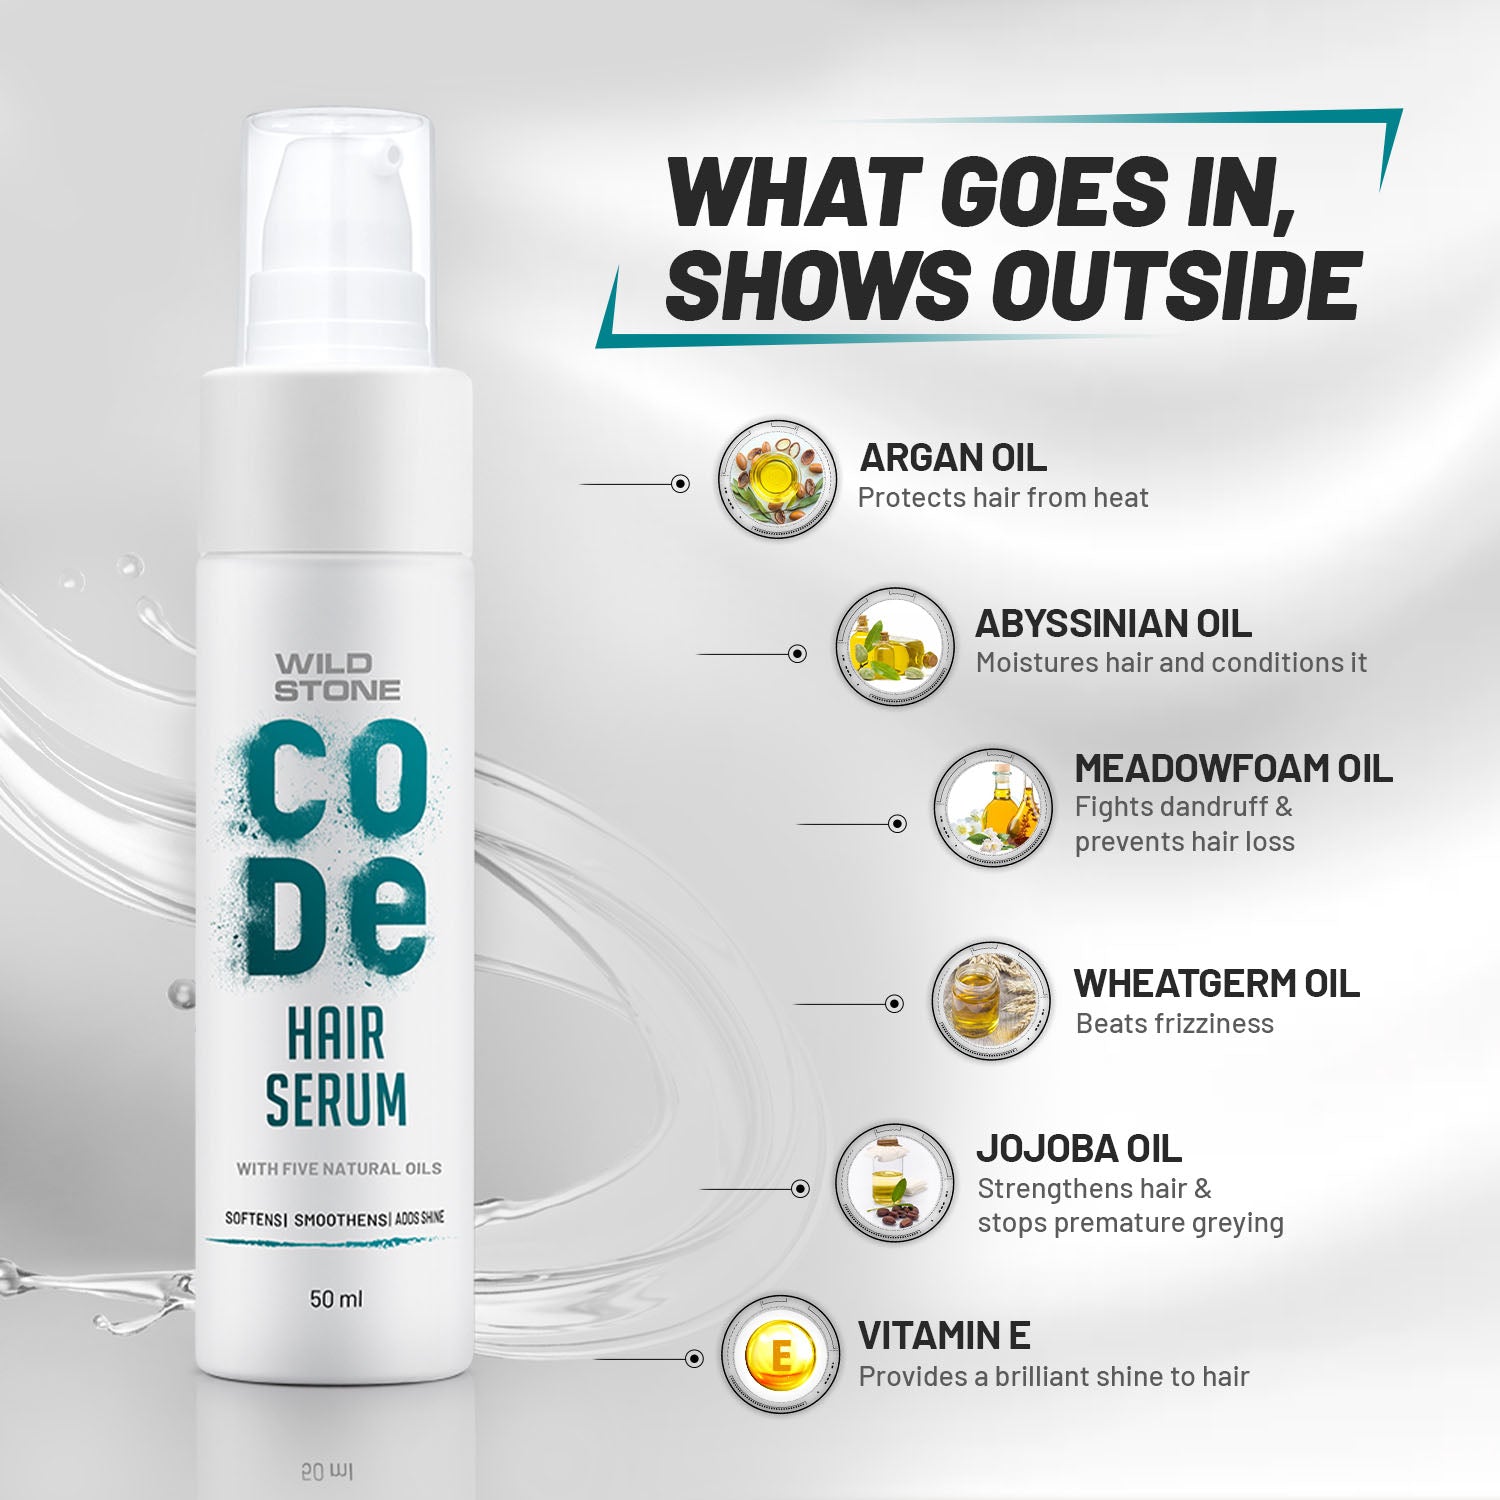 CODE Hair serum ingredients and benefits